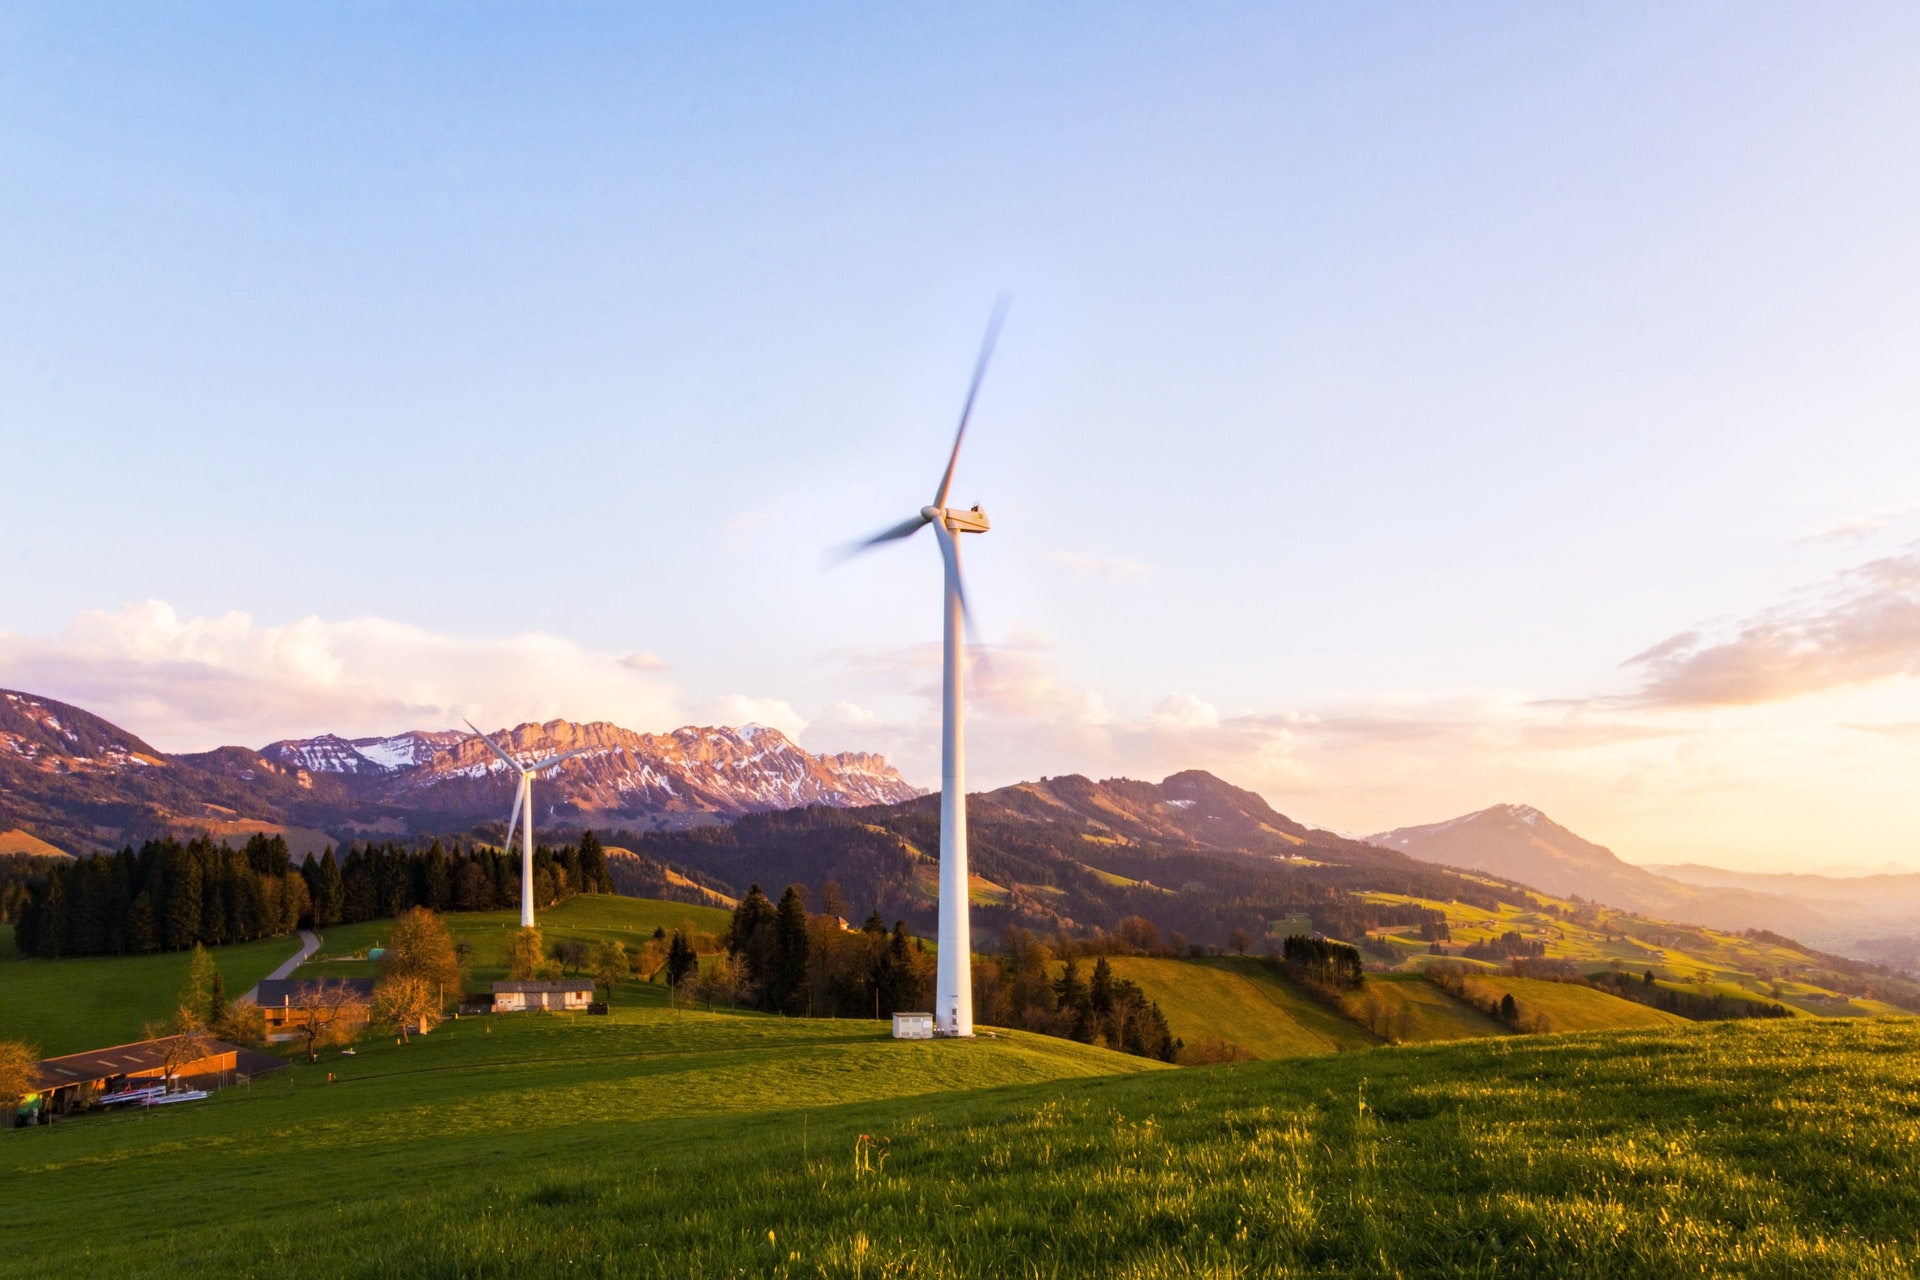 renouvelables efficacite energetique conseil europeen valide plan ue - L'Energeek